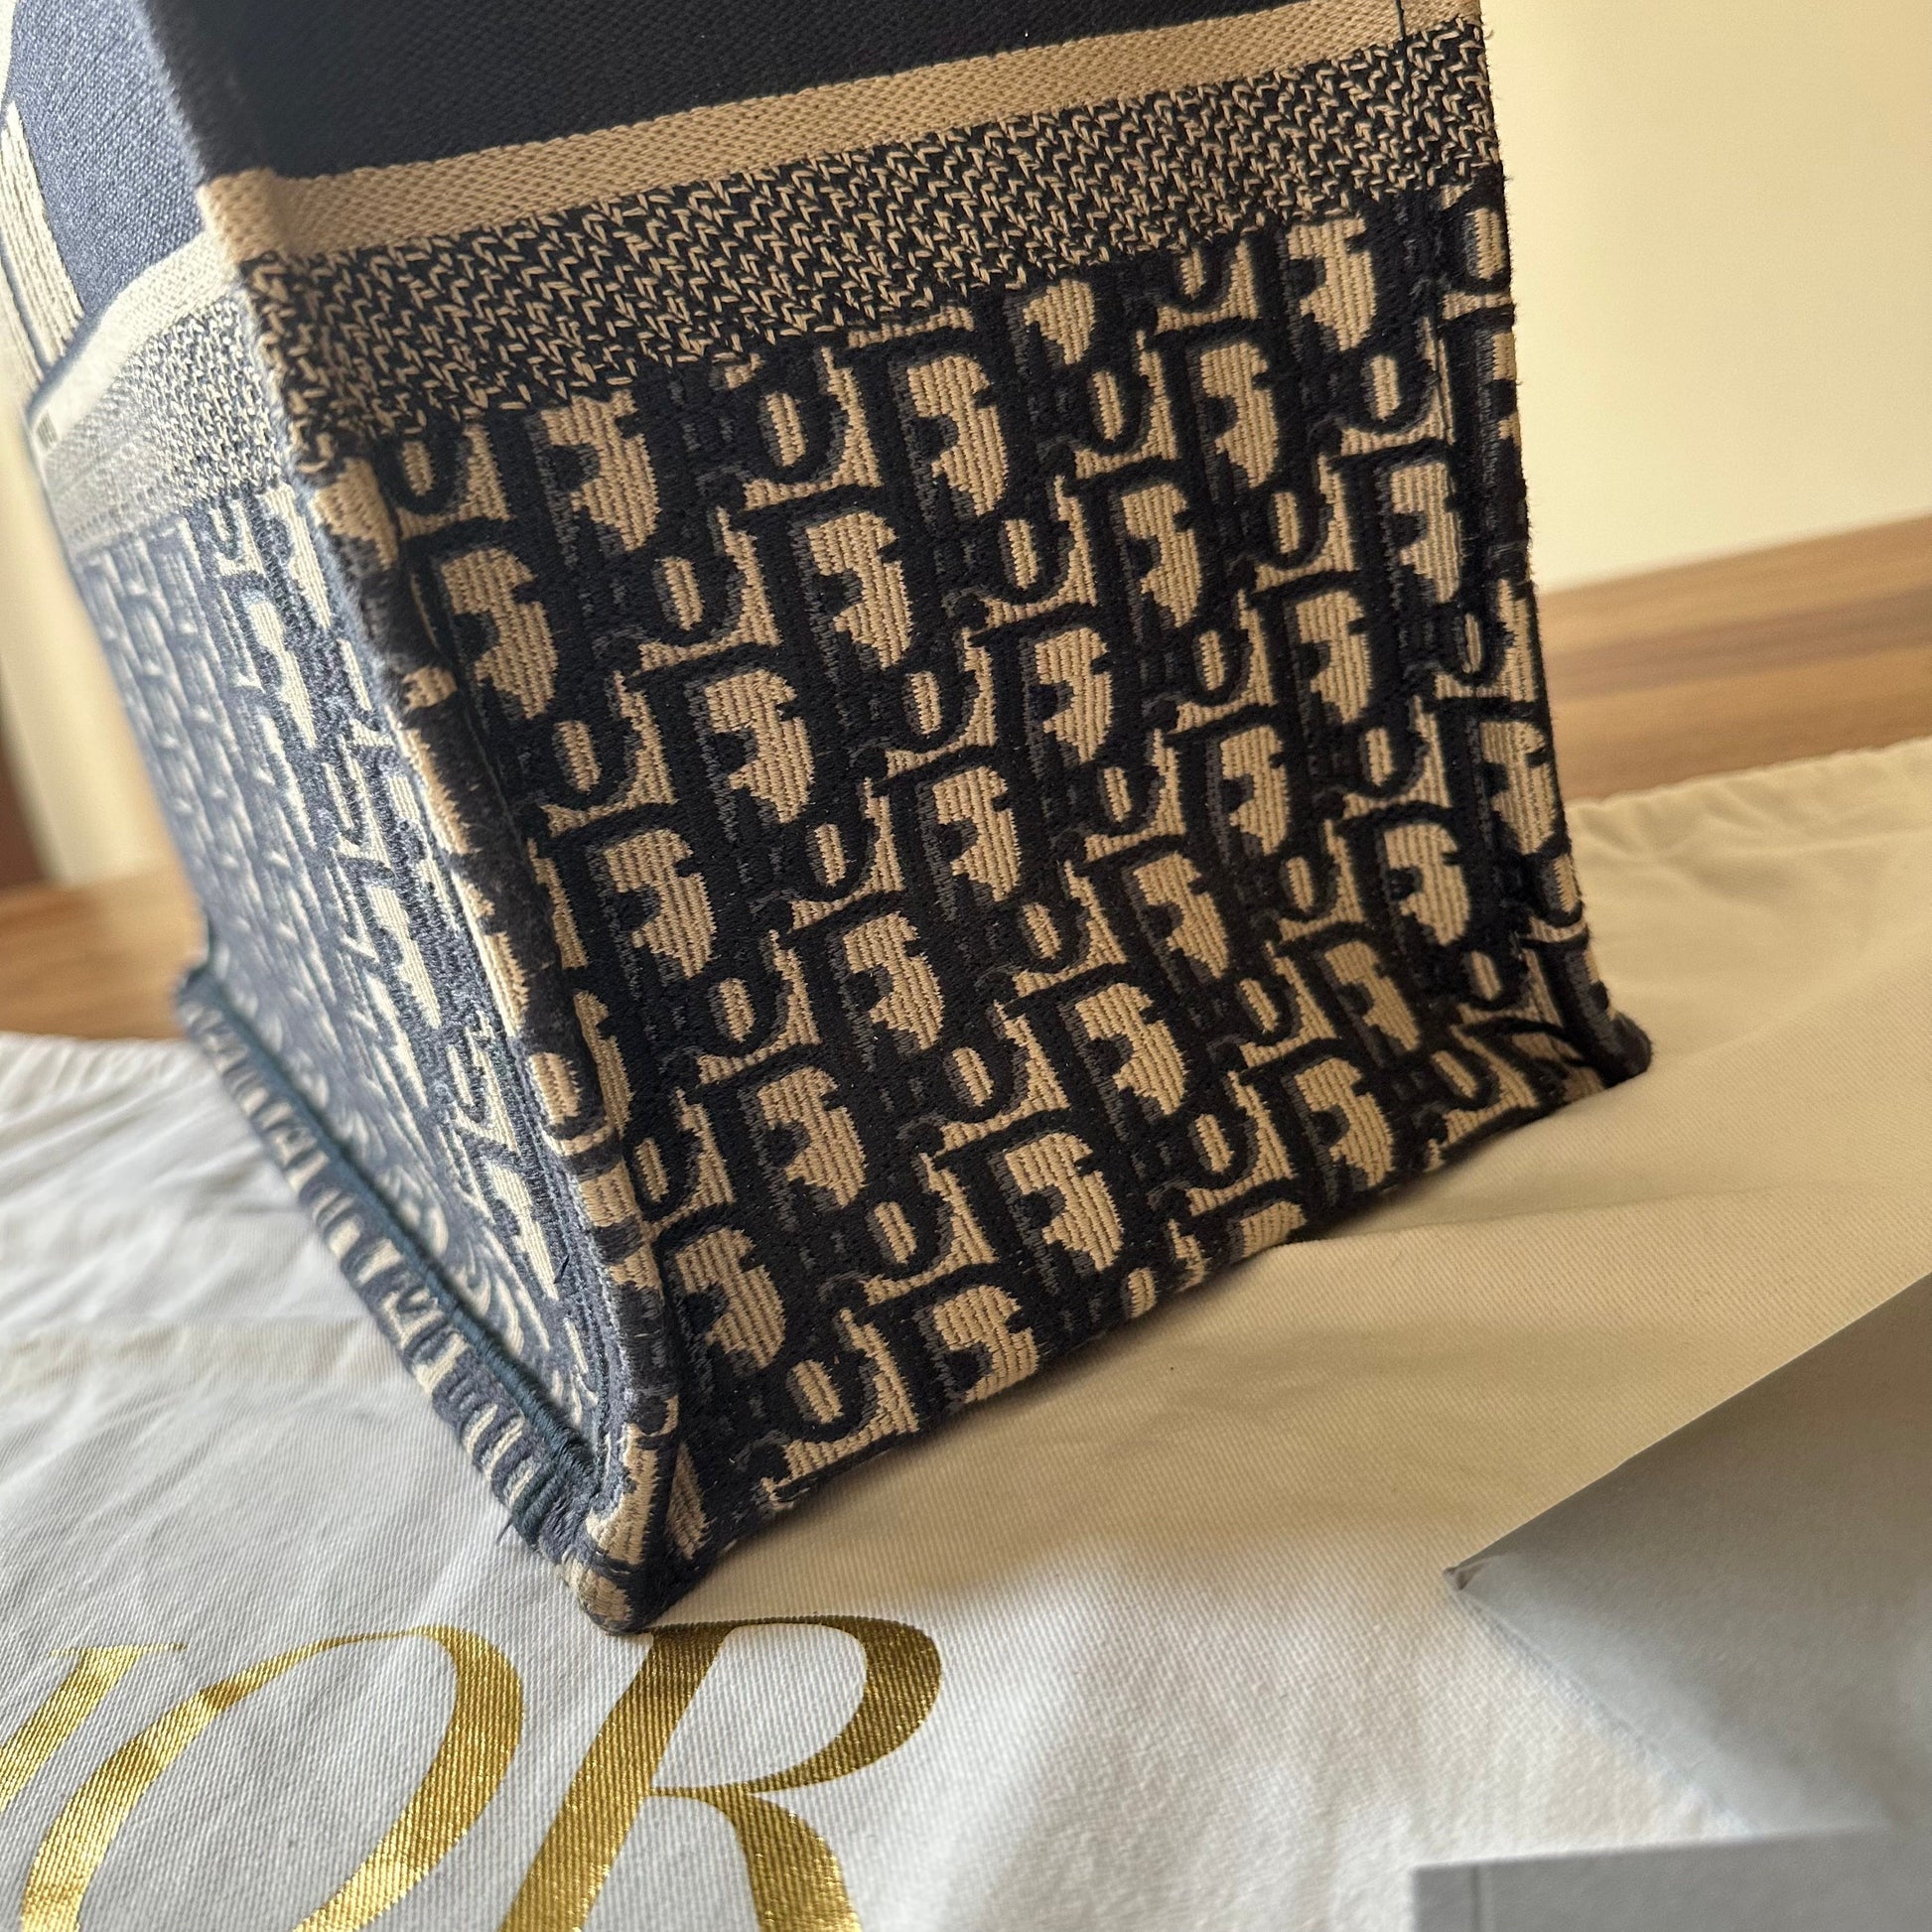 Christian Dior Oblique Book Tote in Large